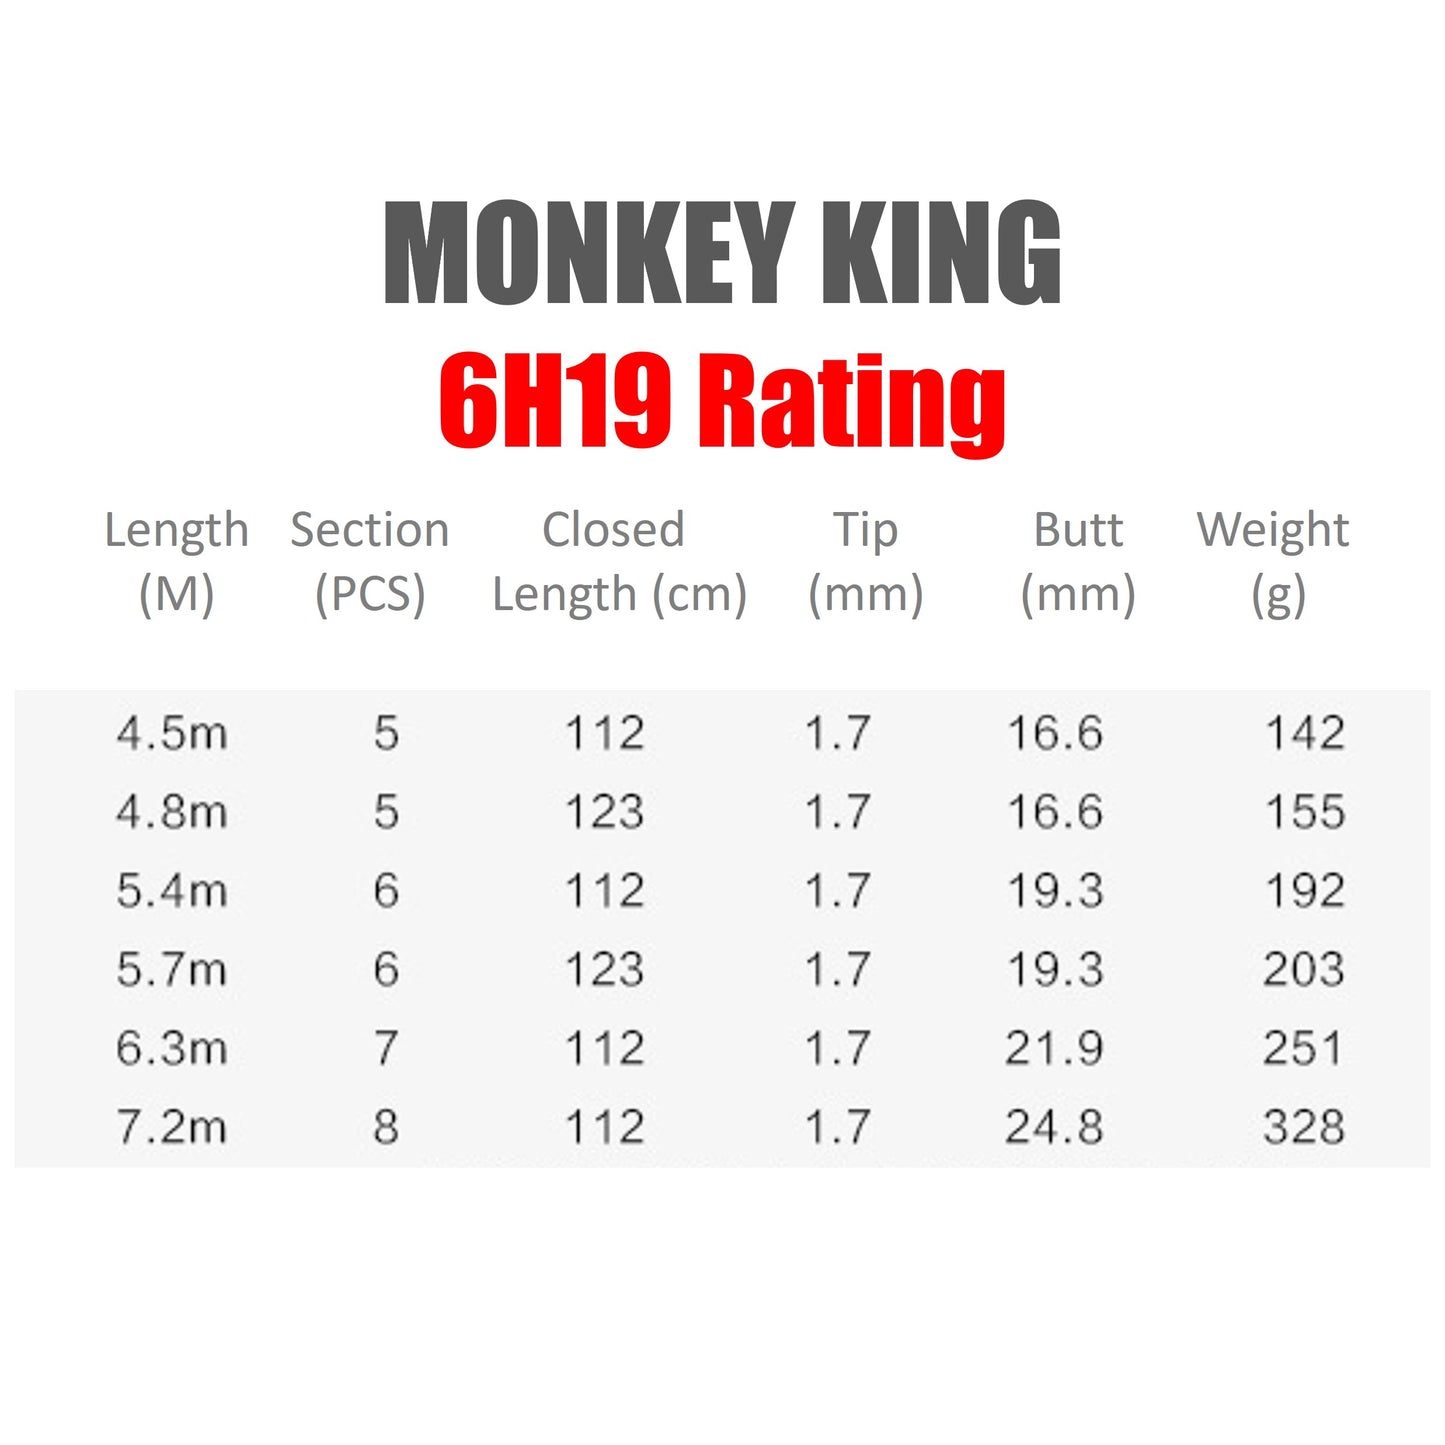 Monkey King Pole Rod 6H19 Rating PR013